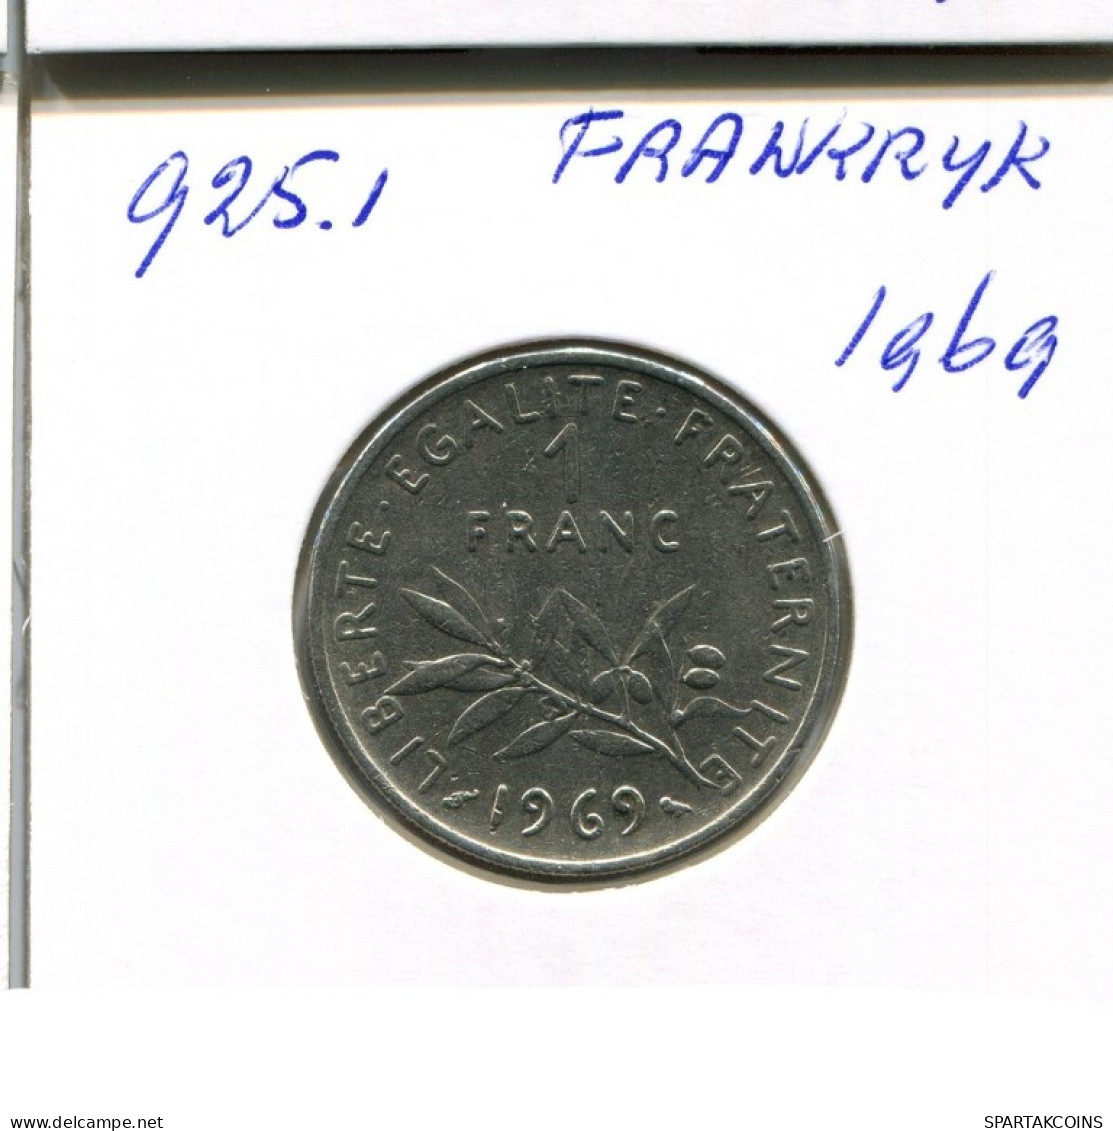 1 FRANC 1969 FRANCE Coin French Coin #AN311.U.A - 1 Franc